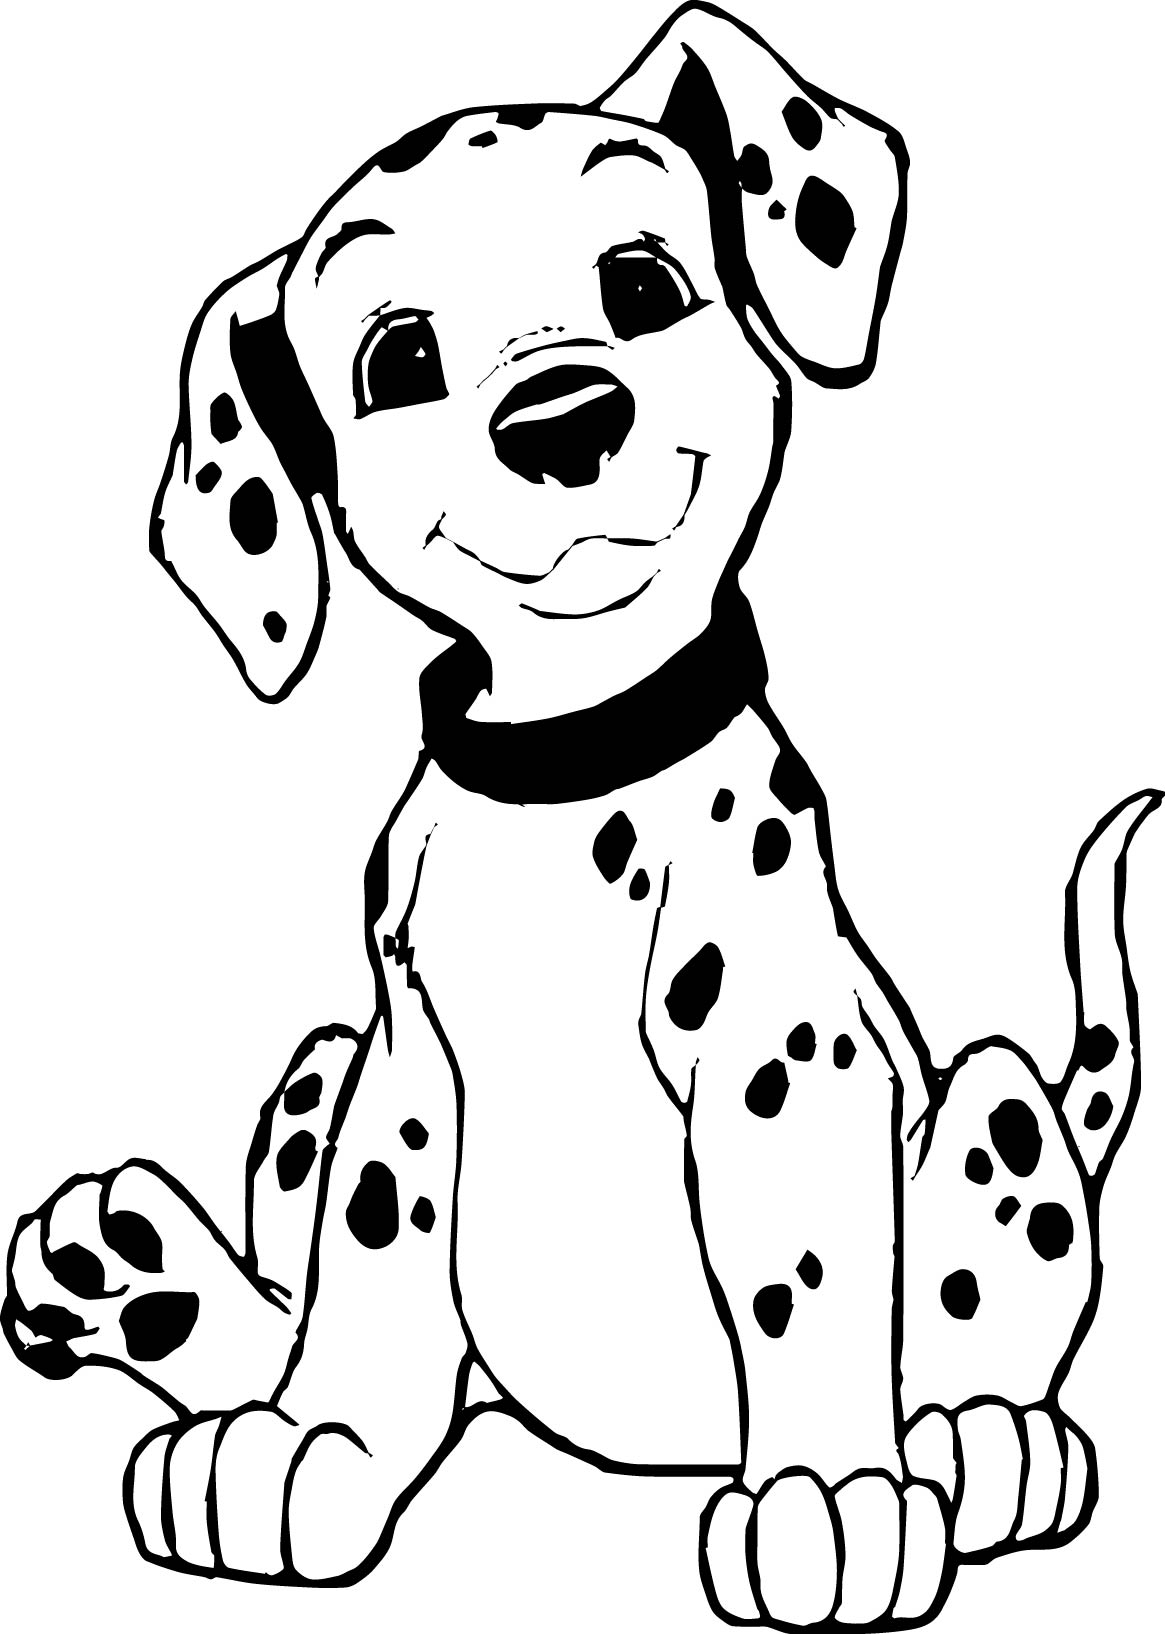 Dalmatian Dog Coloring Page at GetColoringscom Free